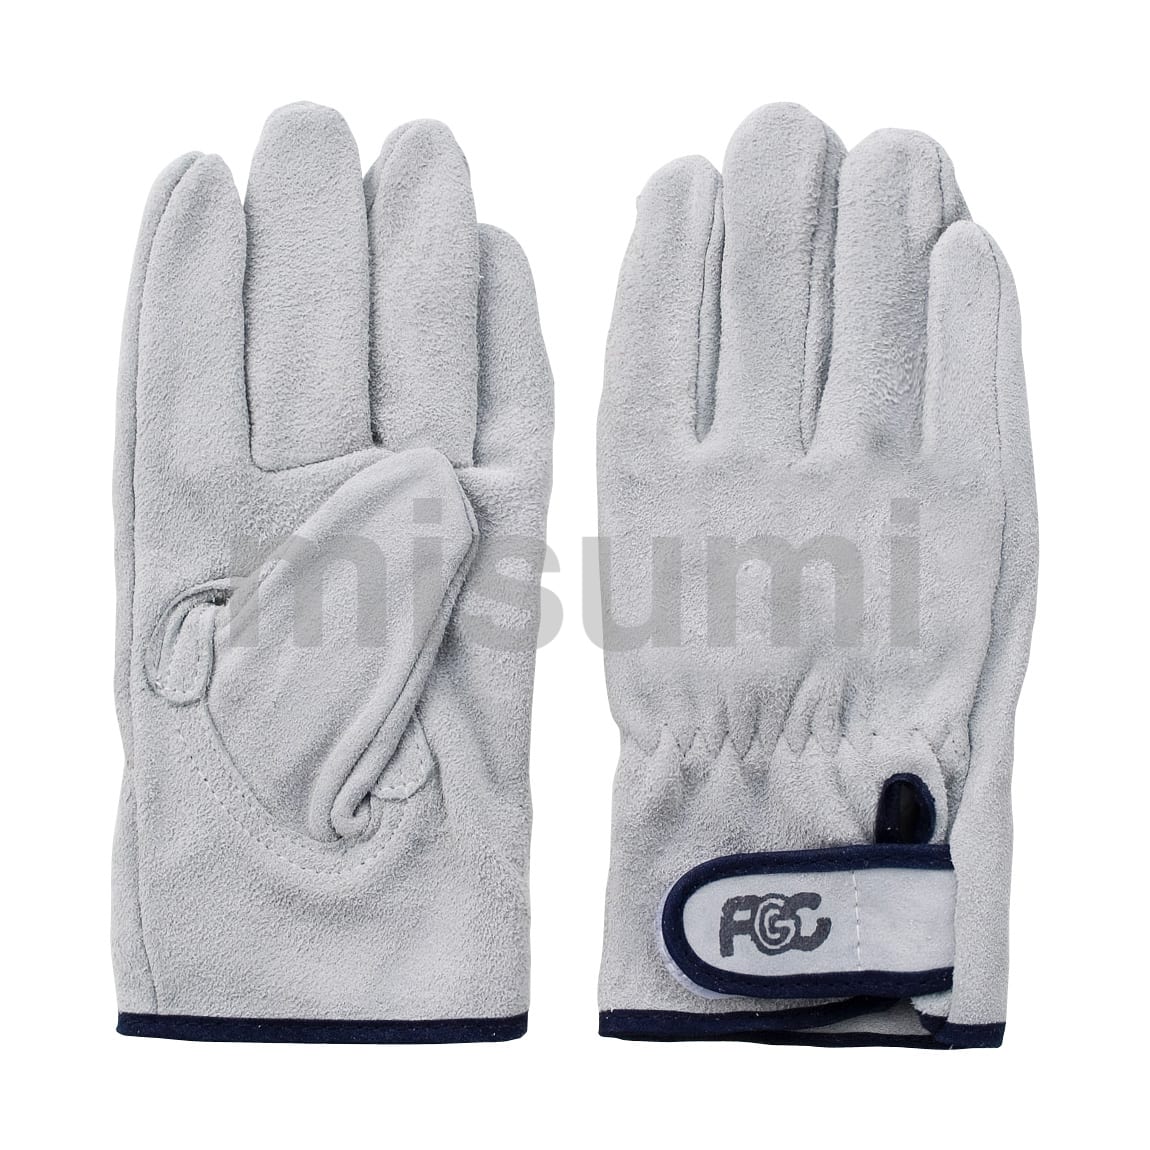 FGC EX-232 豚皮レインジャー(あてなし) マジック付皮手袋 10双組 (LLサイズ) - 1